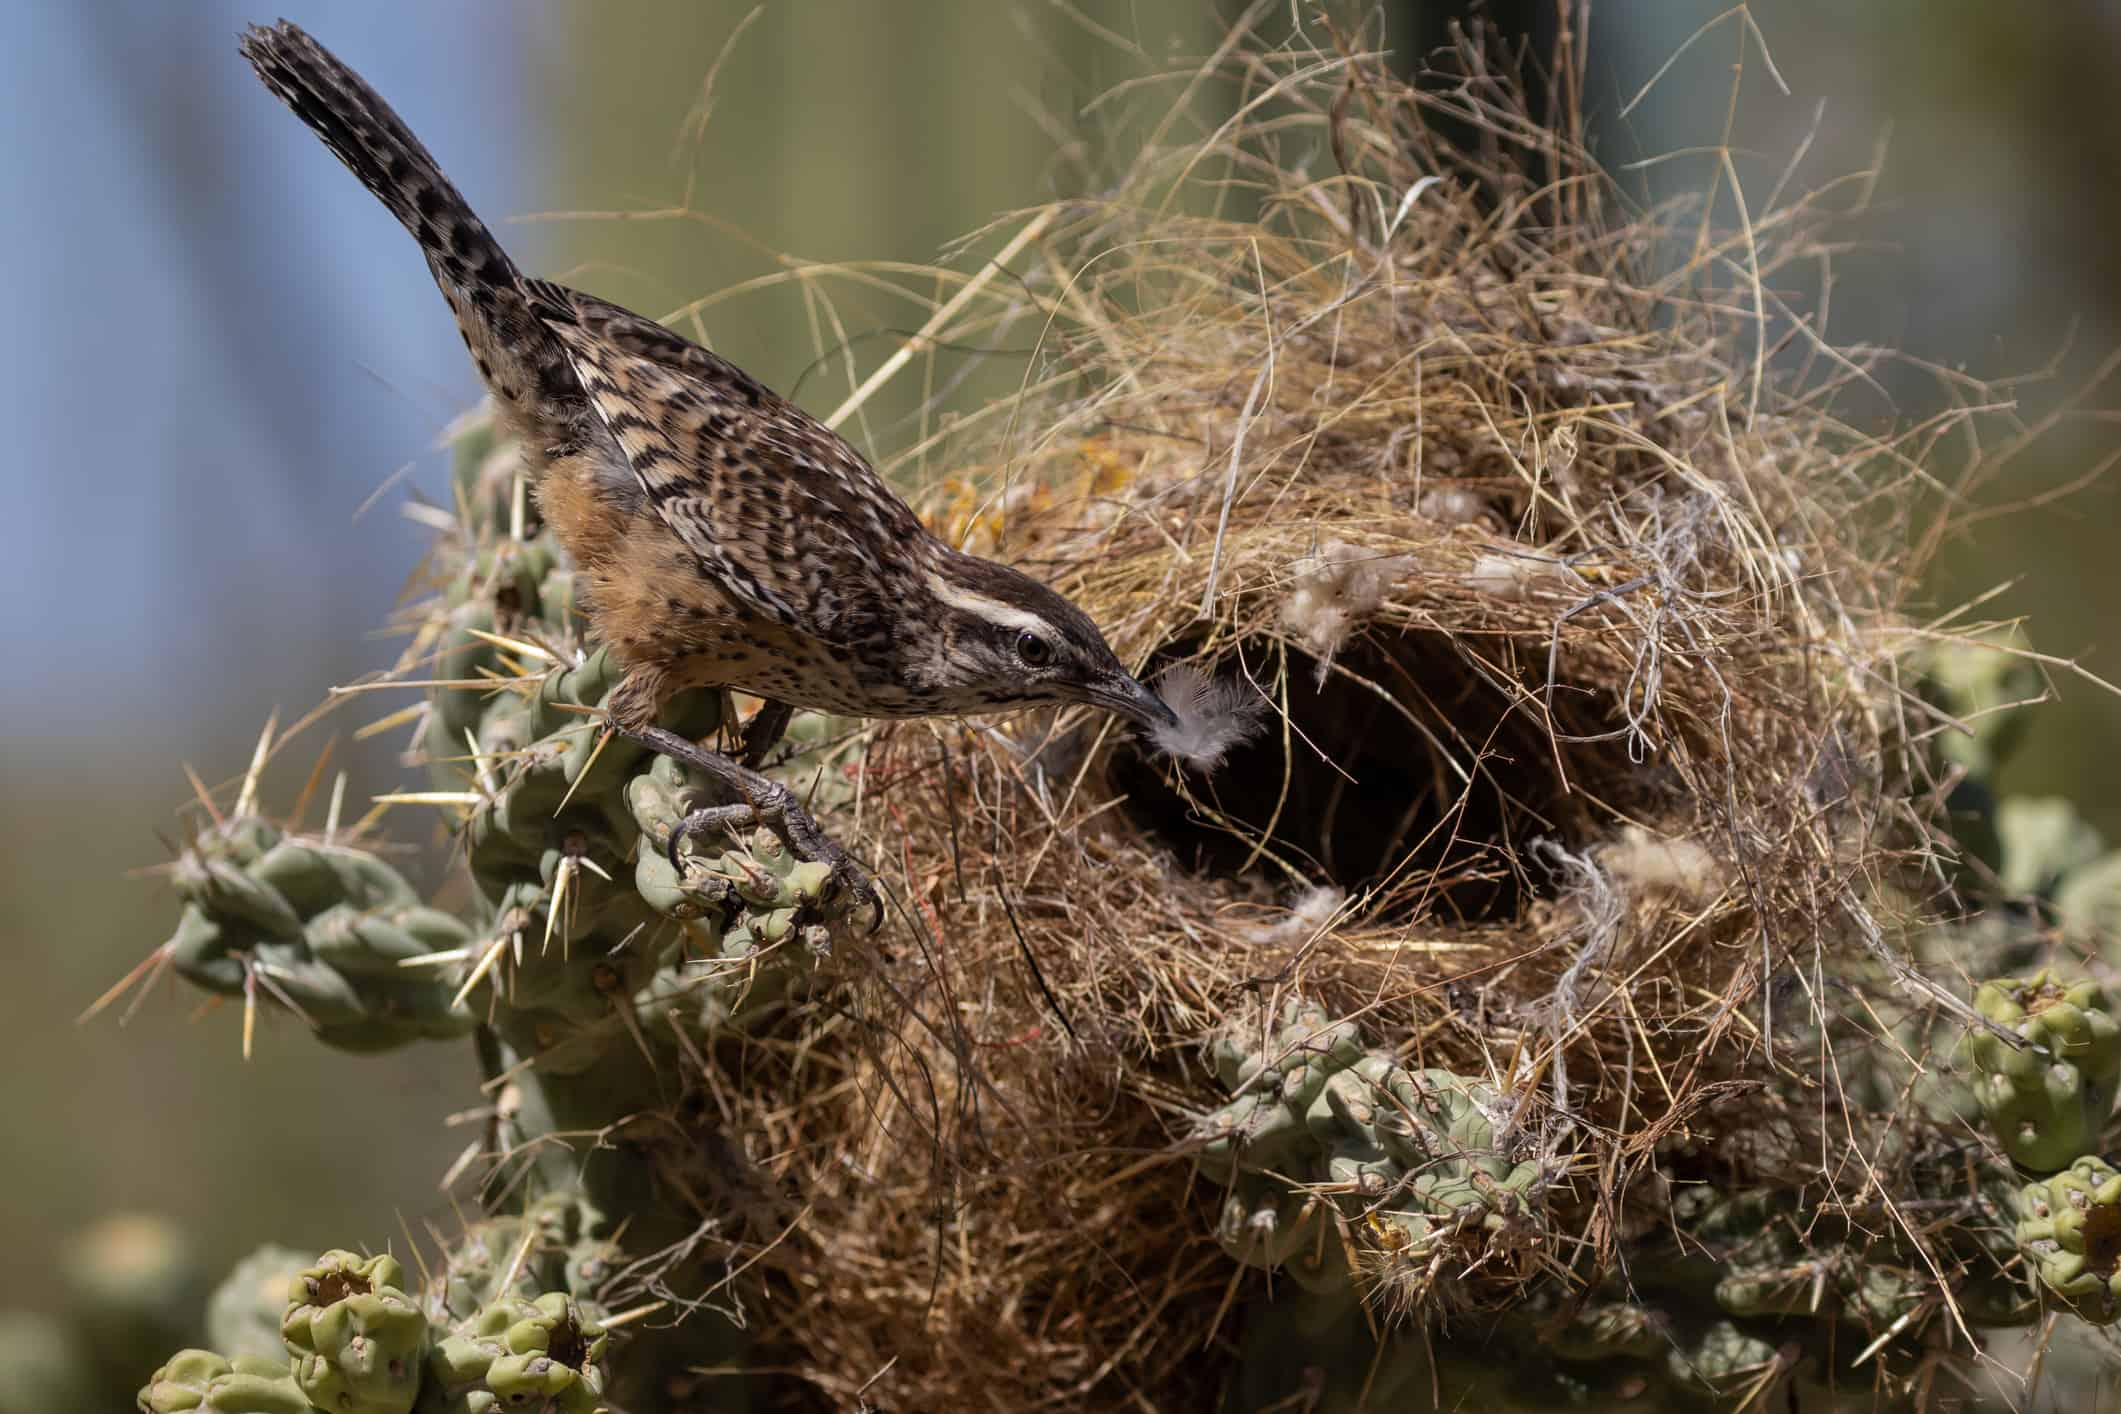 Cactus Wren Building Nest in Sonoran Desert Environment